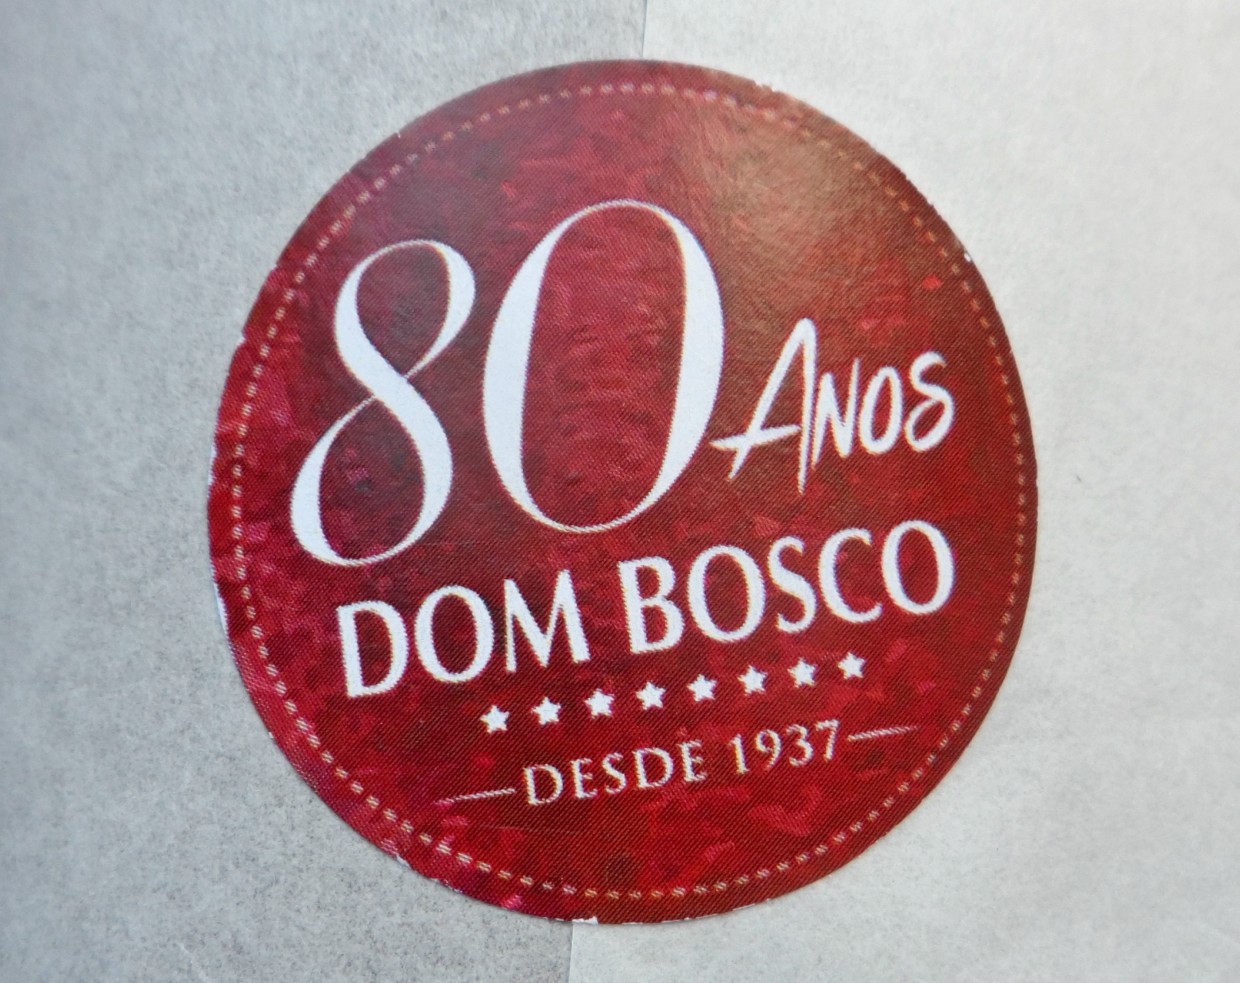 Vinho Dom Bosco 